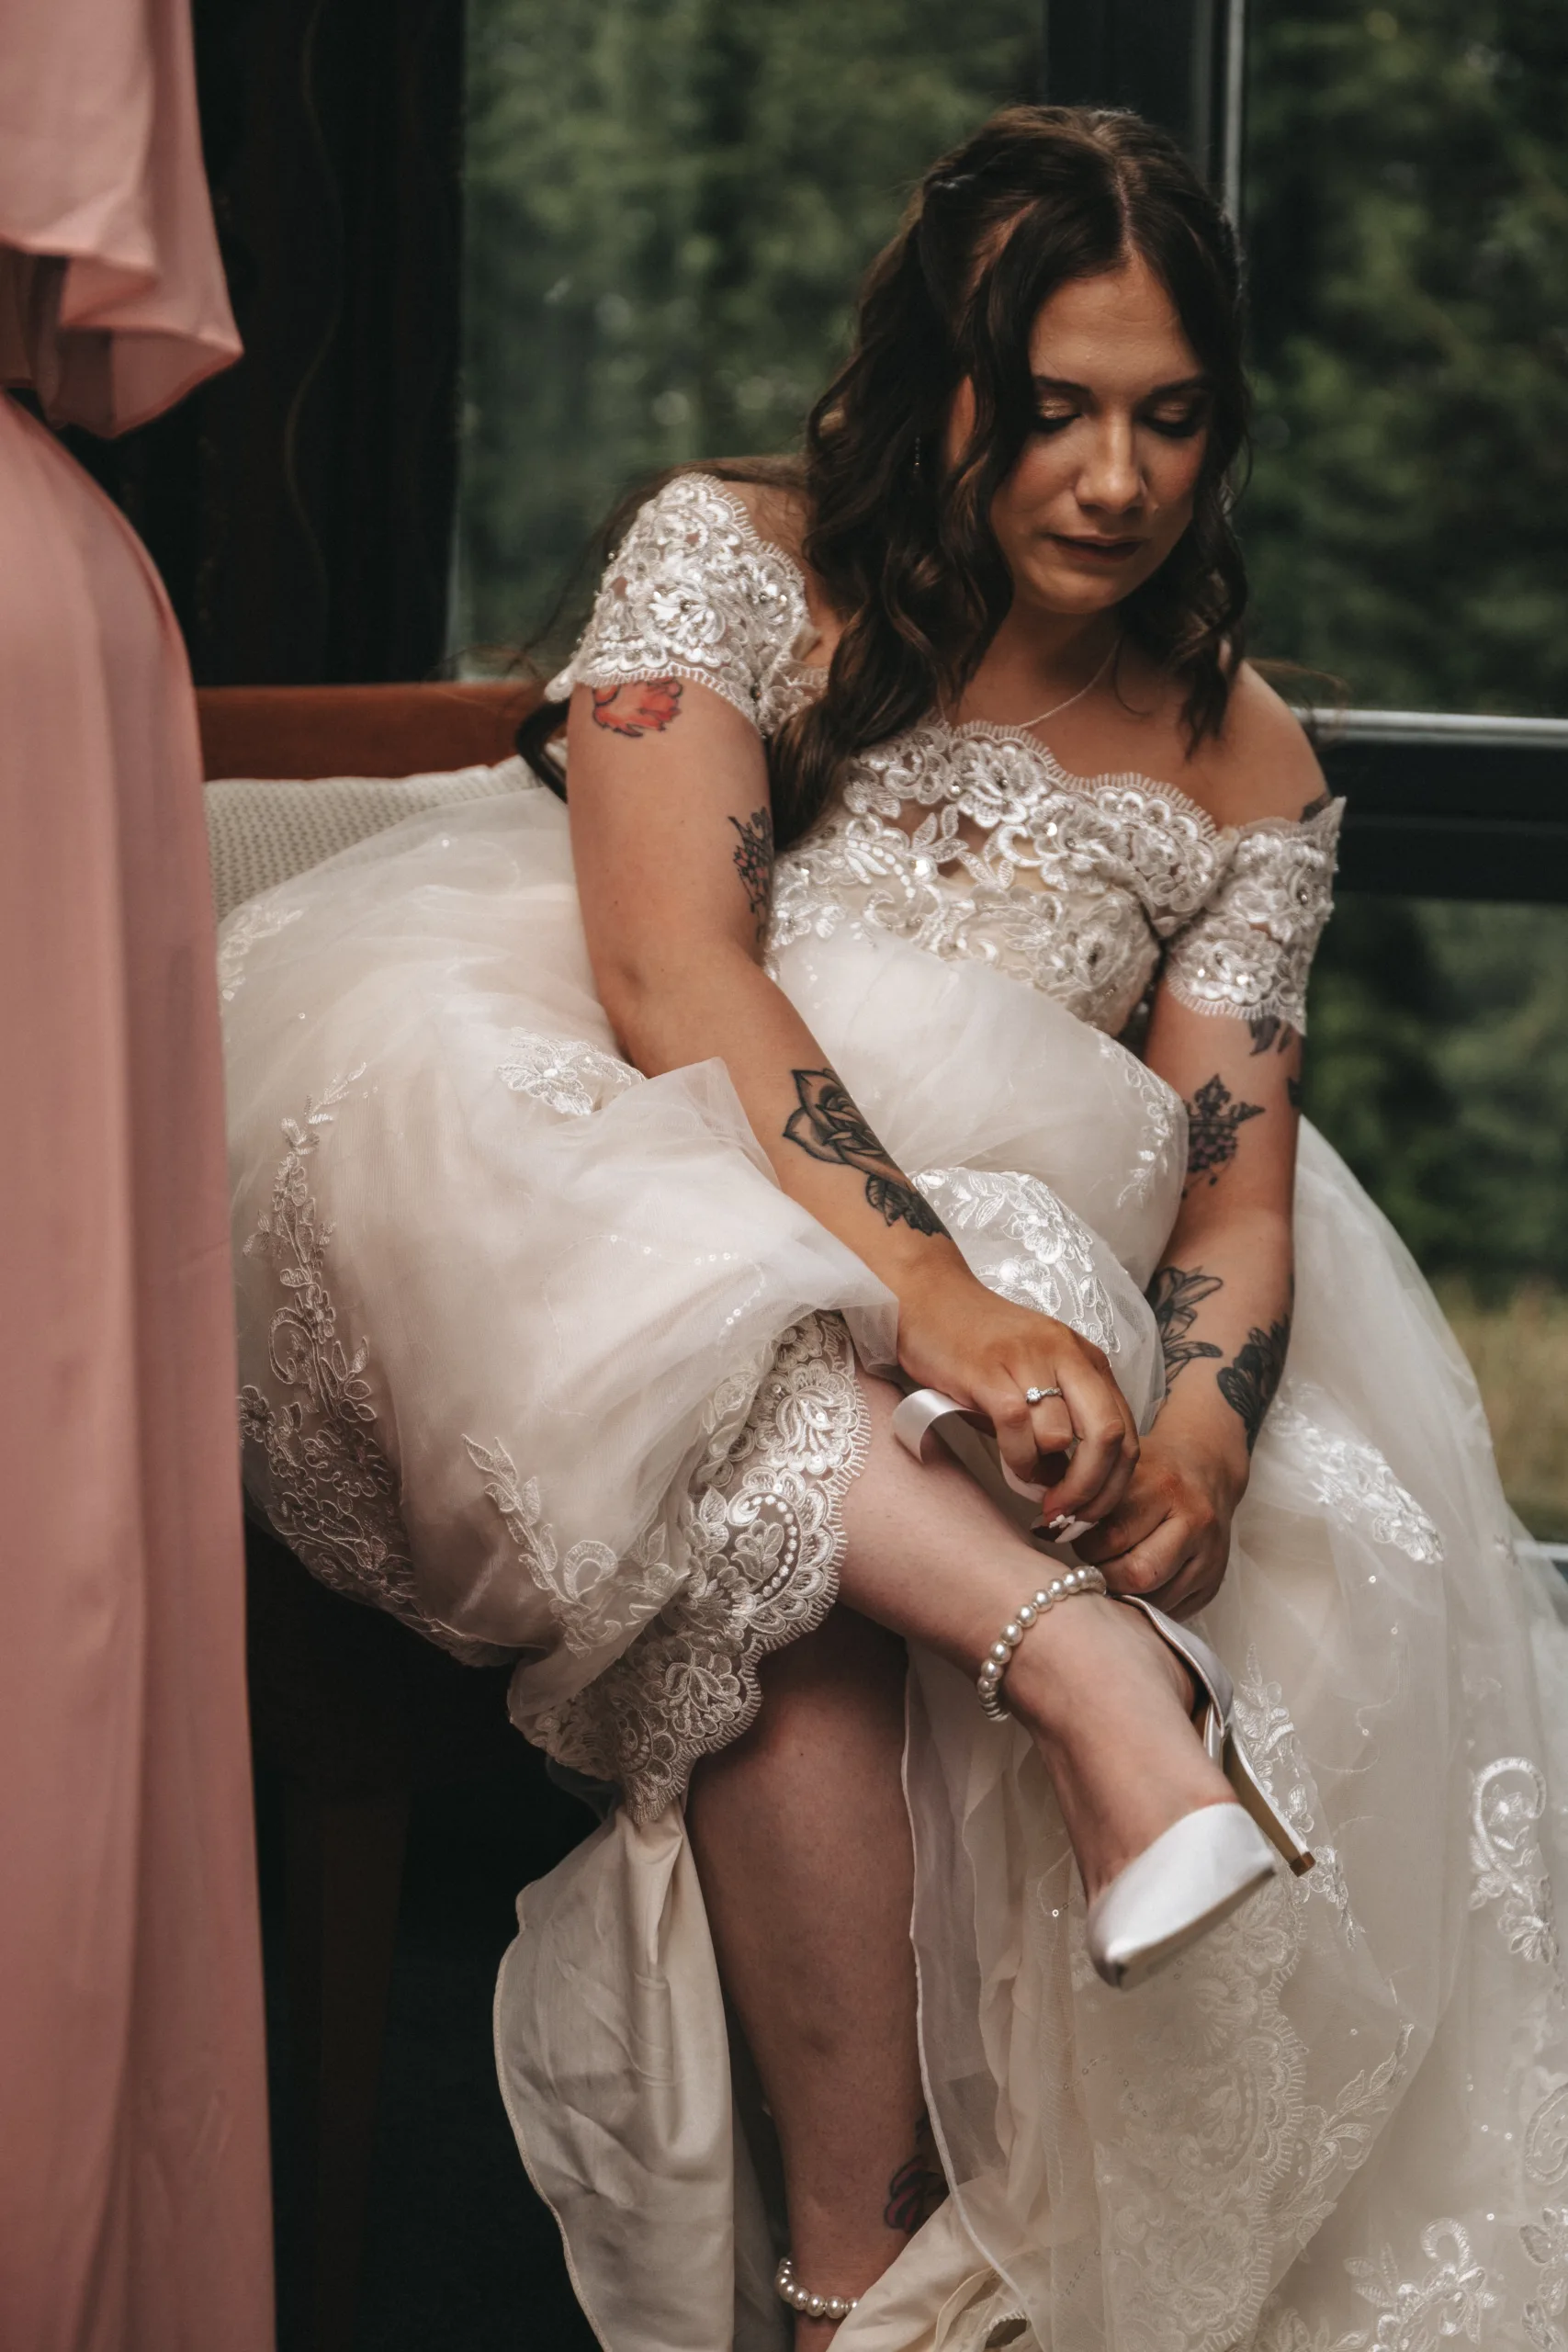 A woman in a wedding dress.